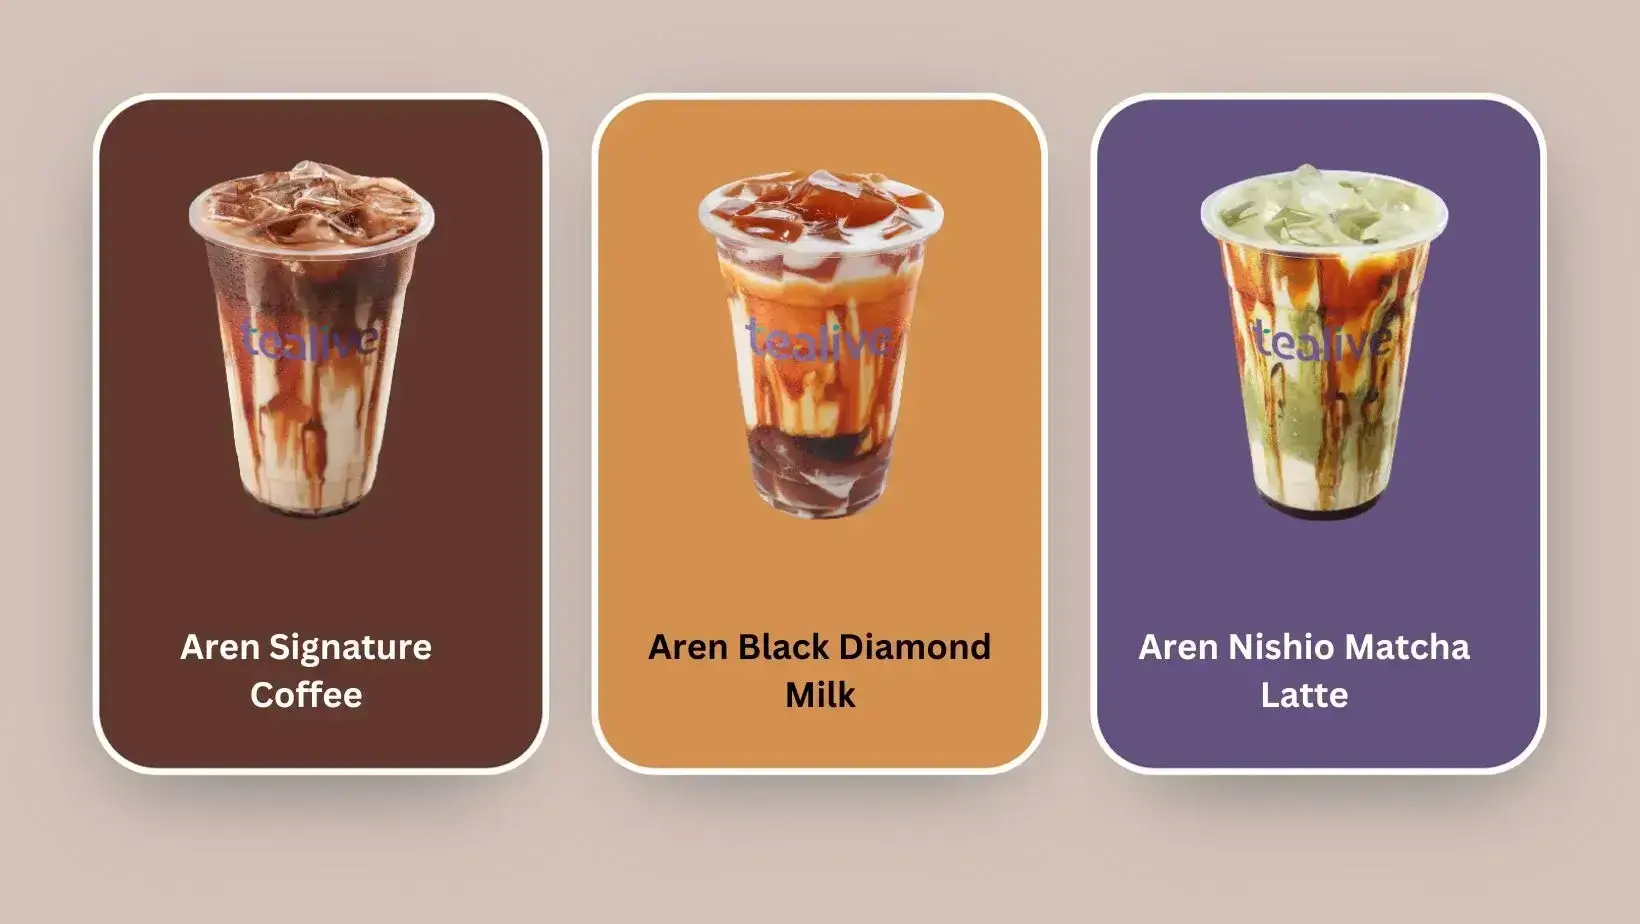 Aren Black Diamond Milk, Aren Nishio Matcha Latte, Aren Signature Coffee in Aren palm sugar category at Tealive menu Malaysia